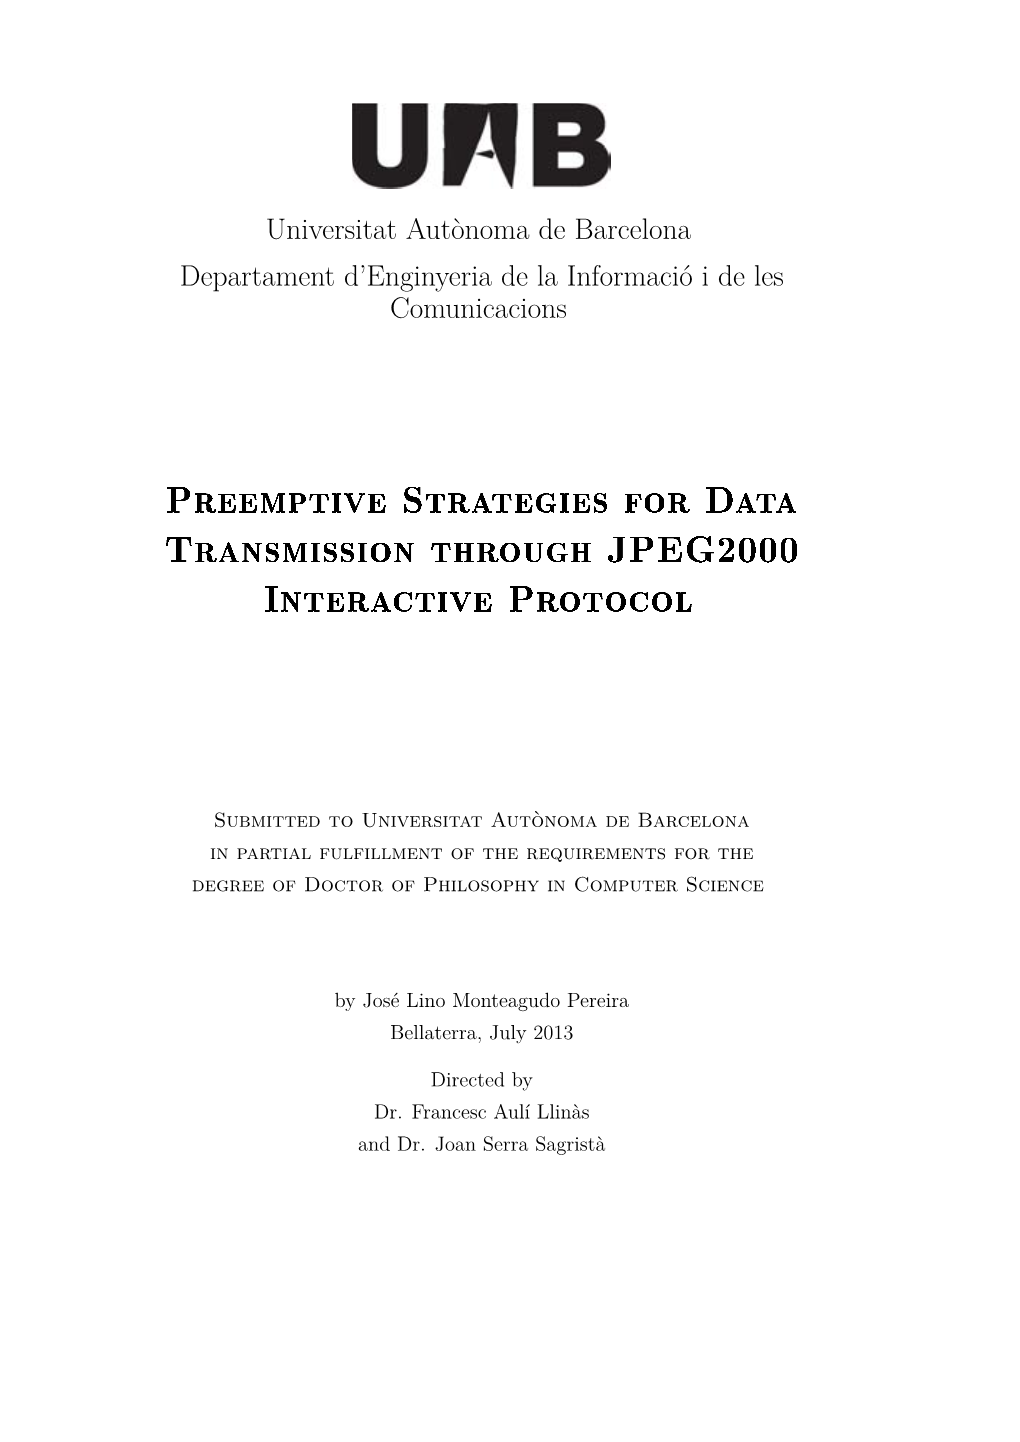 Preemptive Strategies for Data Transmission Through JPEG2000 Interactive Protocol